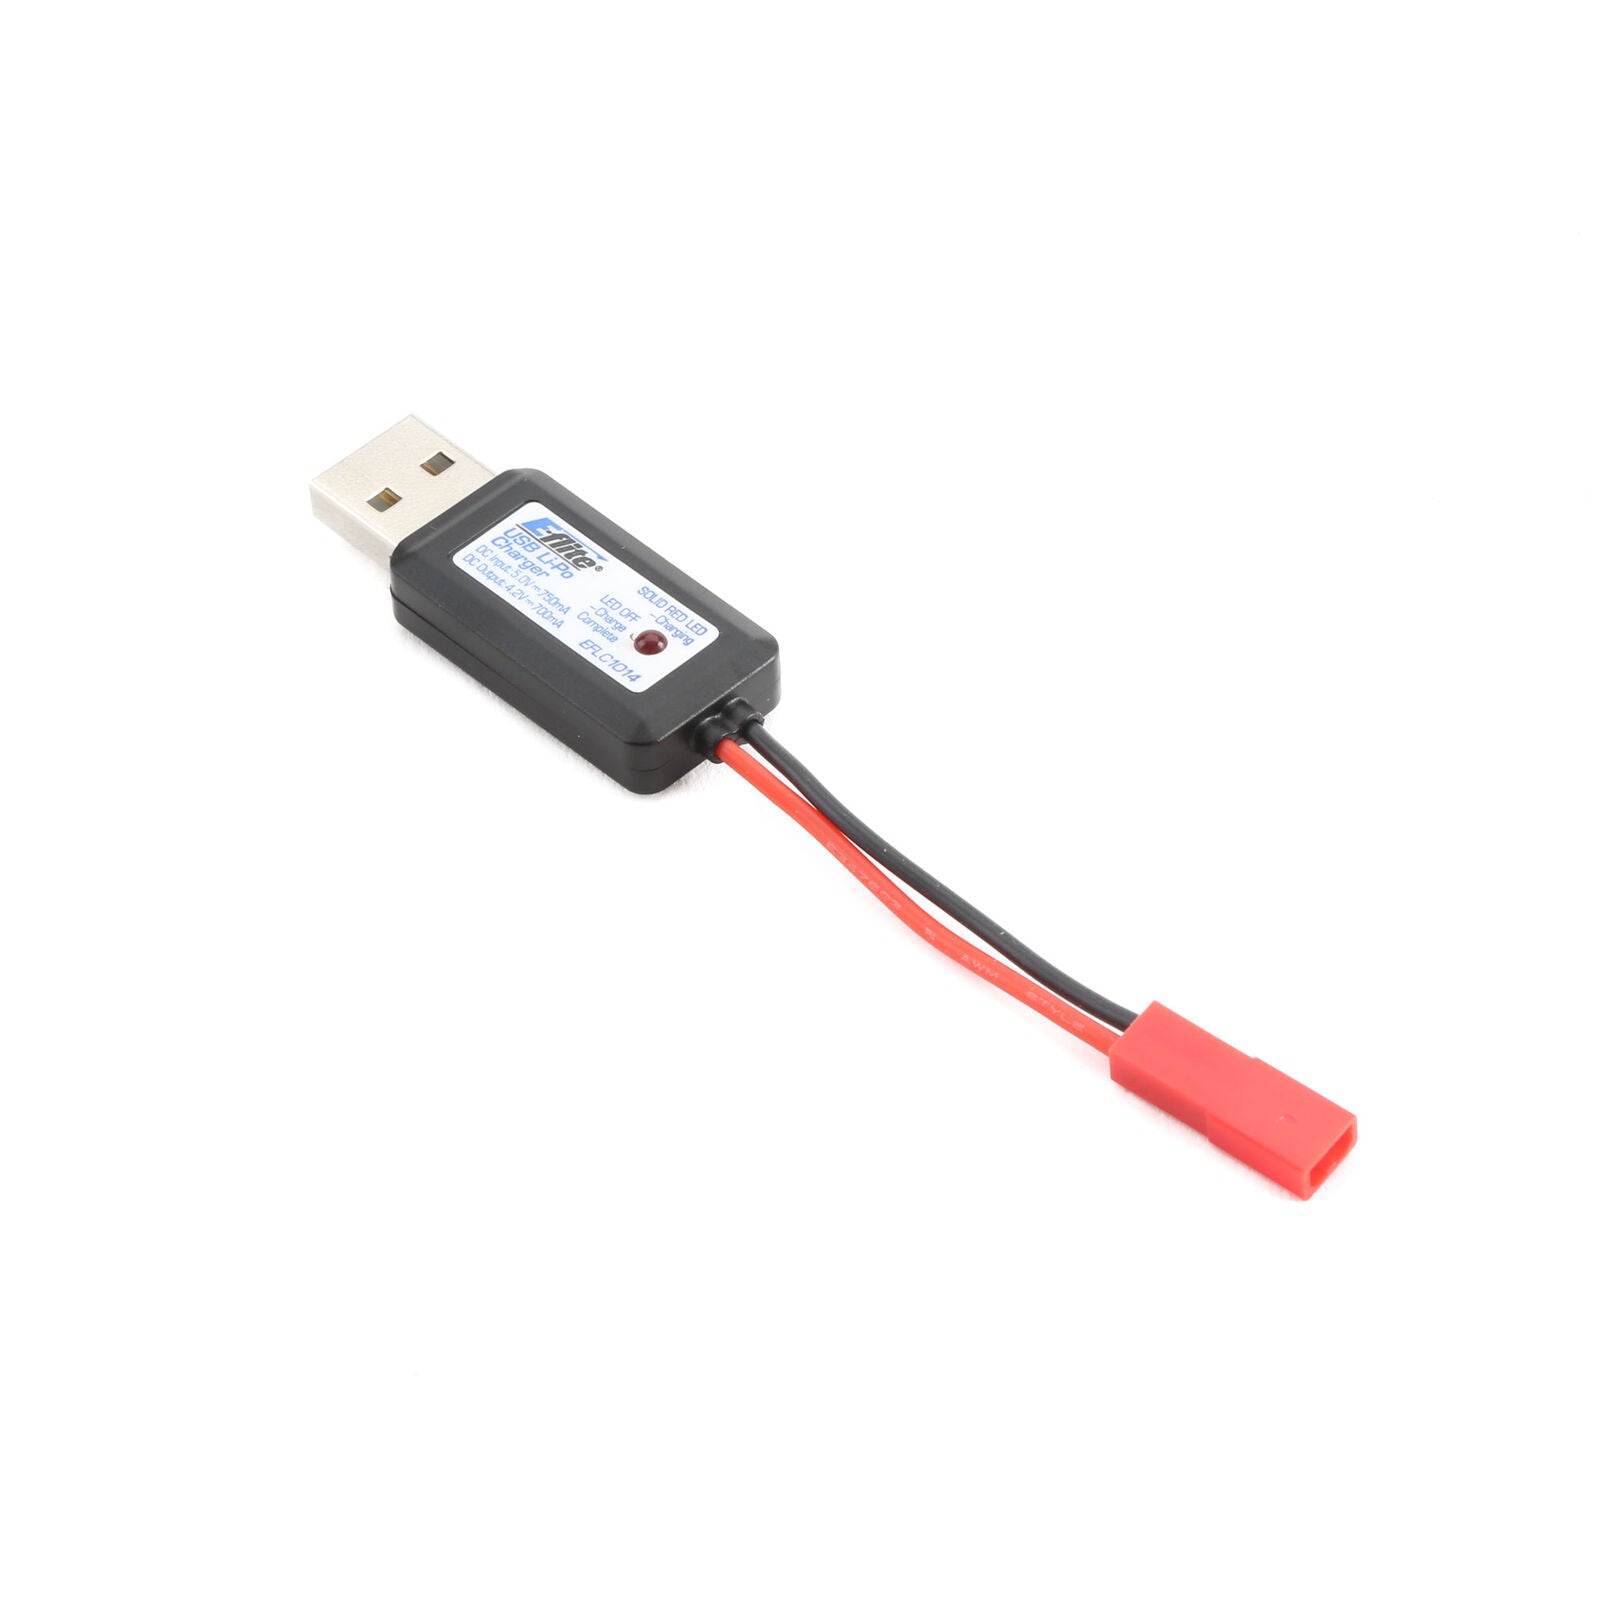 EFLITE EFLC1014 1S USB Li-Po Charger, 700mA, JST